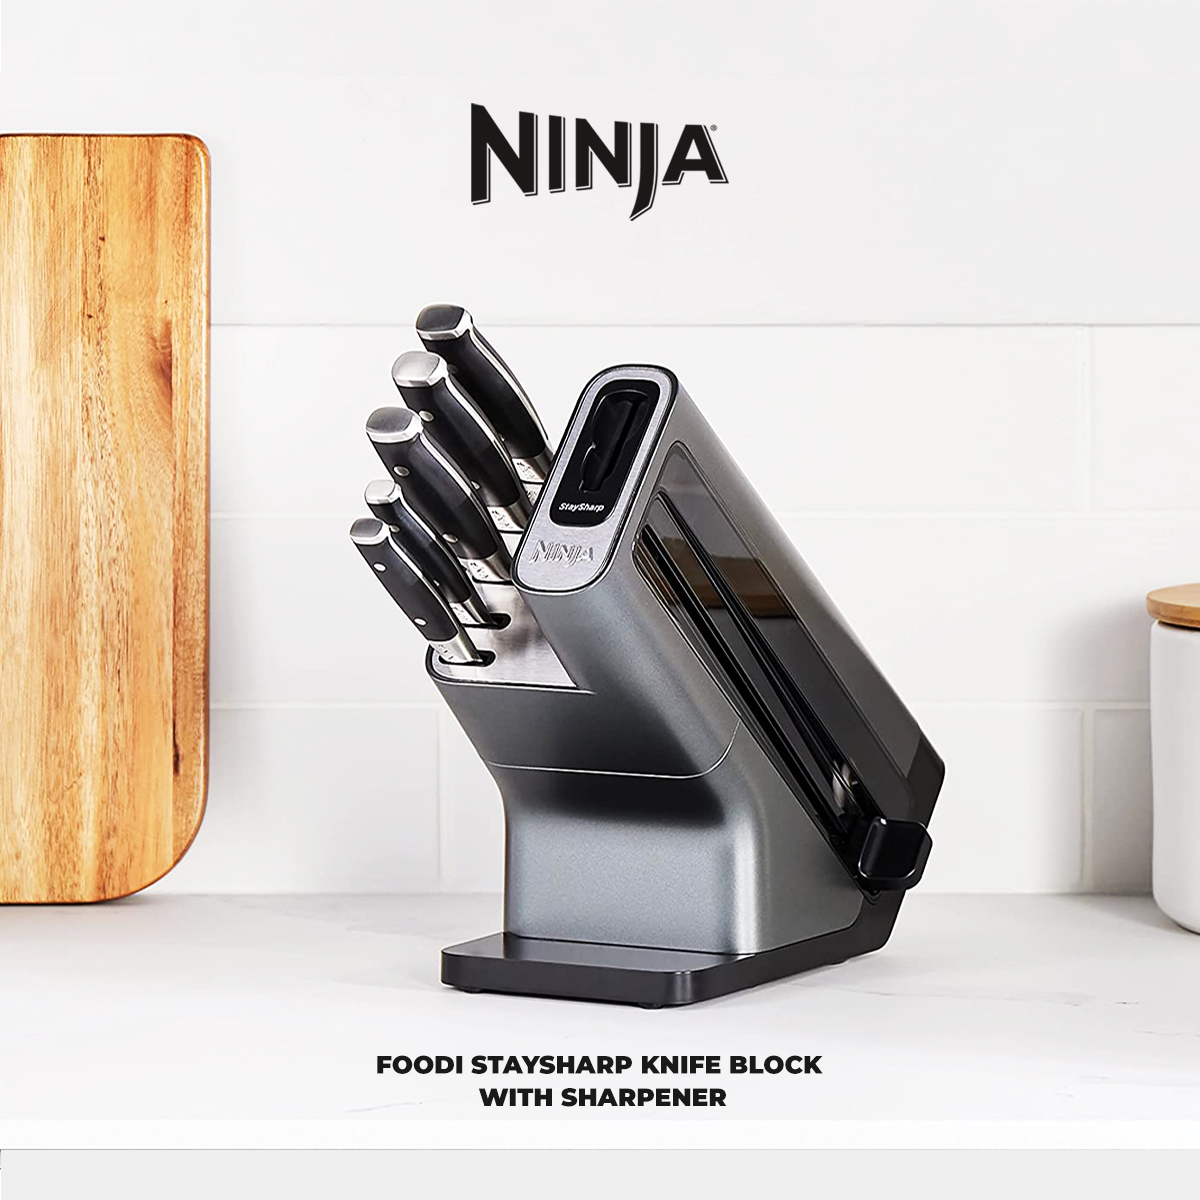 https://www.paragoncompetitions.co.uk/wp-content/uploads/ninja-foodi-stay-sharp-knife-block-set-product-6.jpg